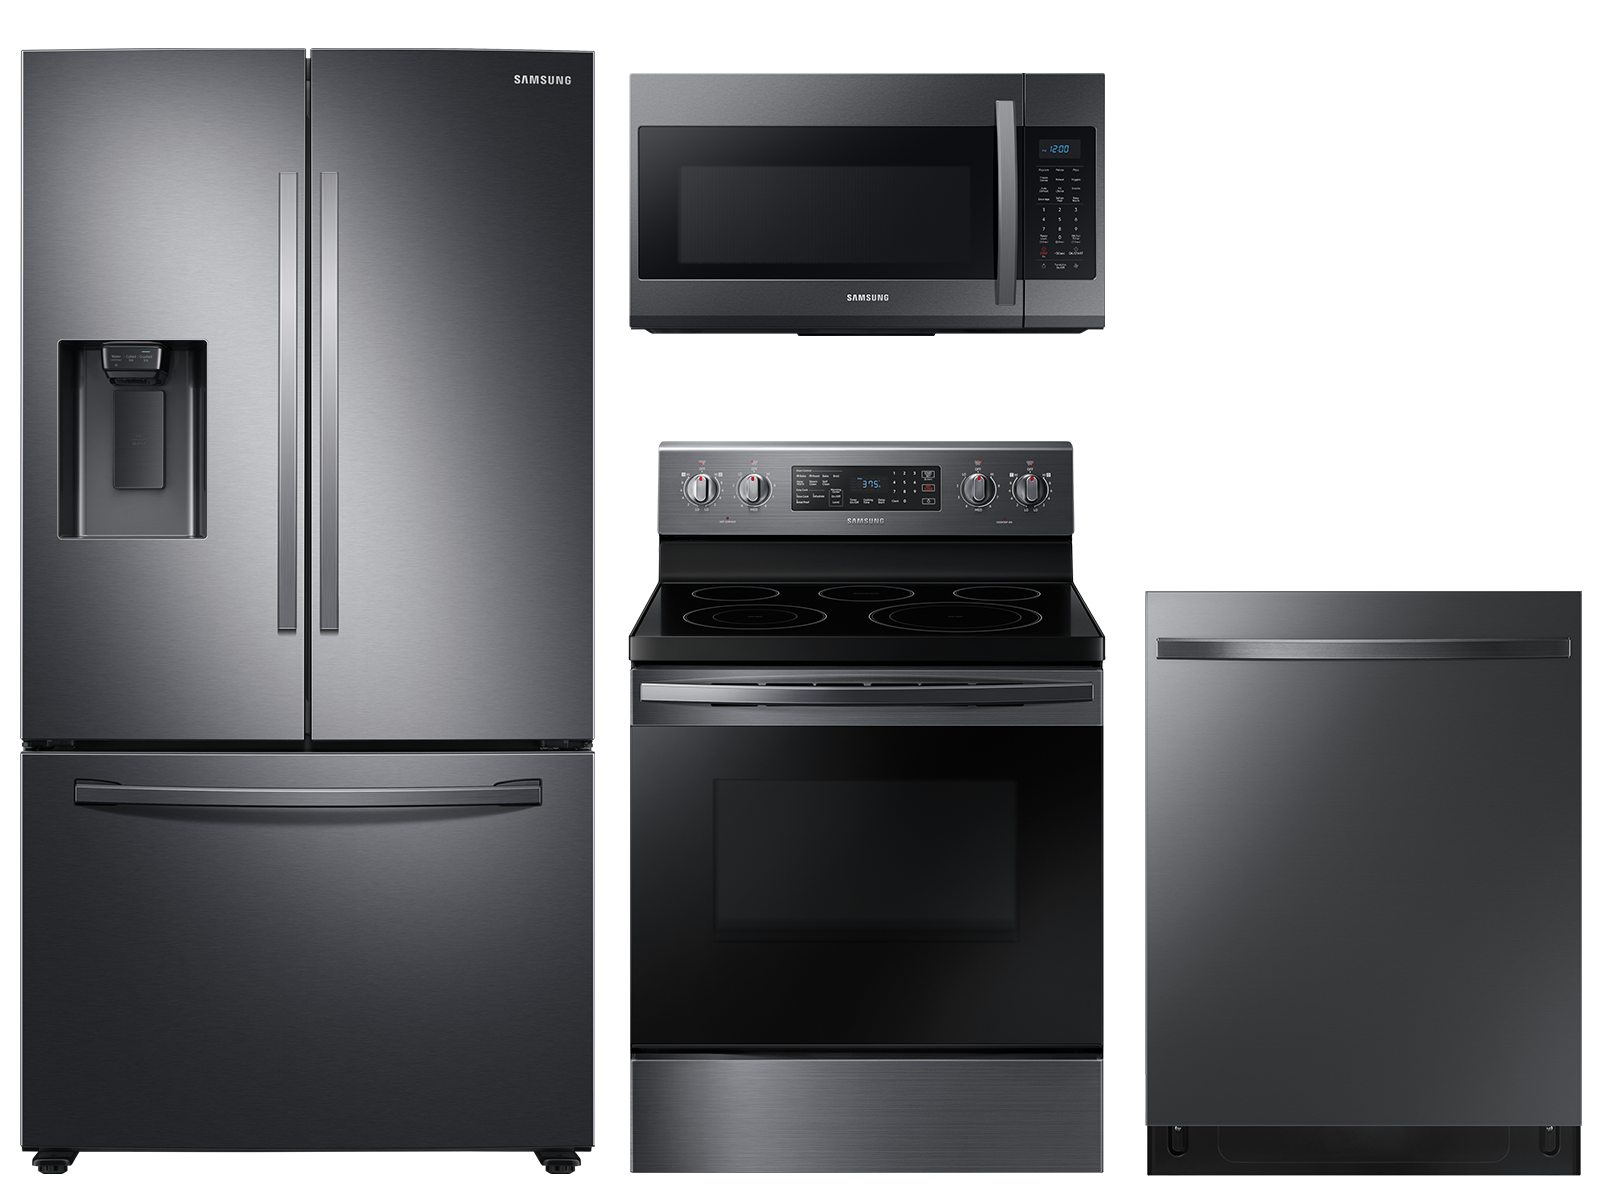 Large capacity 3-door refrigerator & electric range package in black stainless